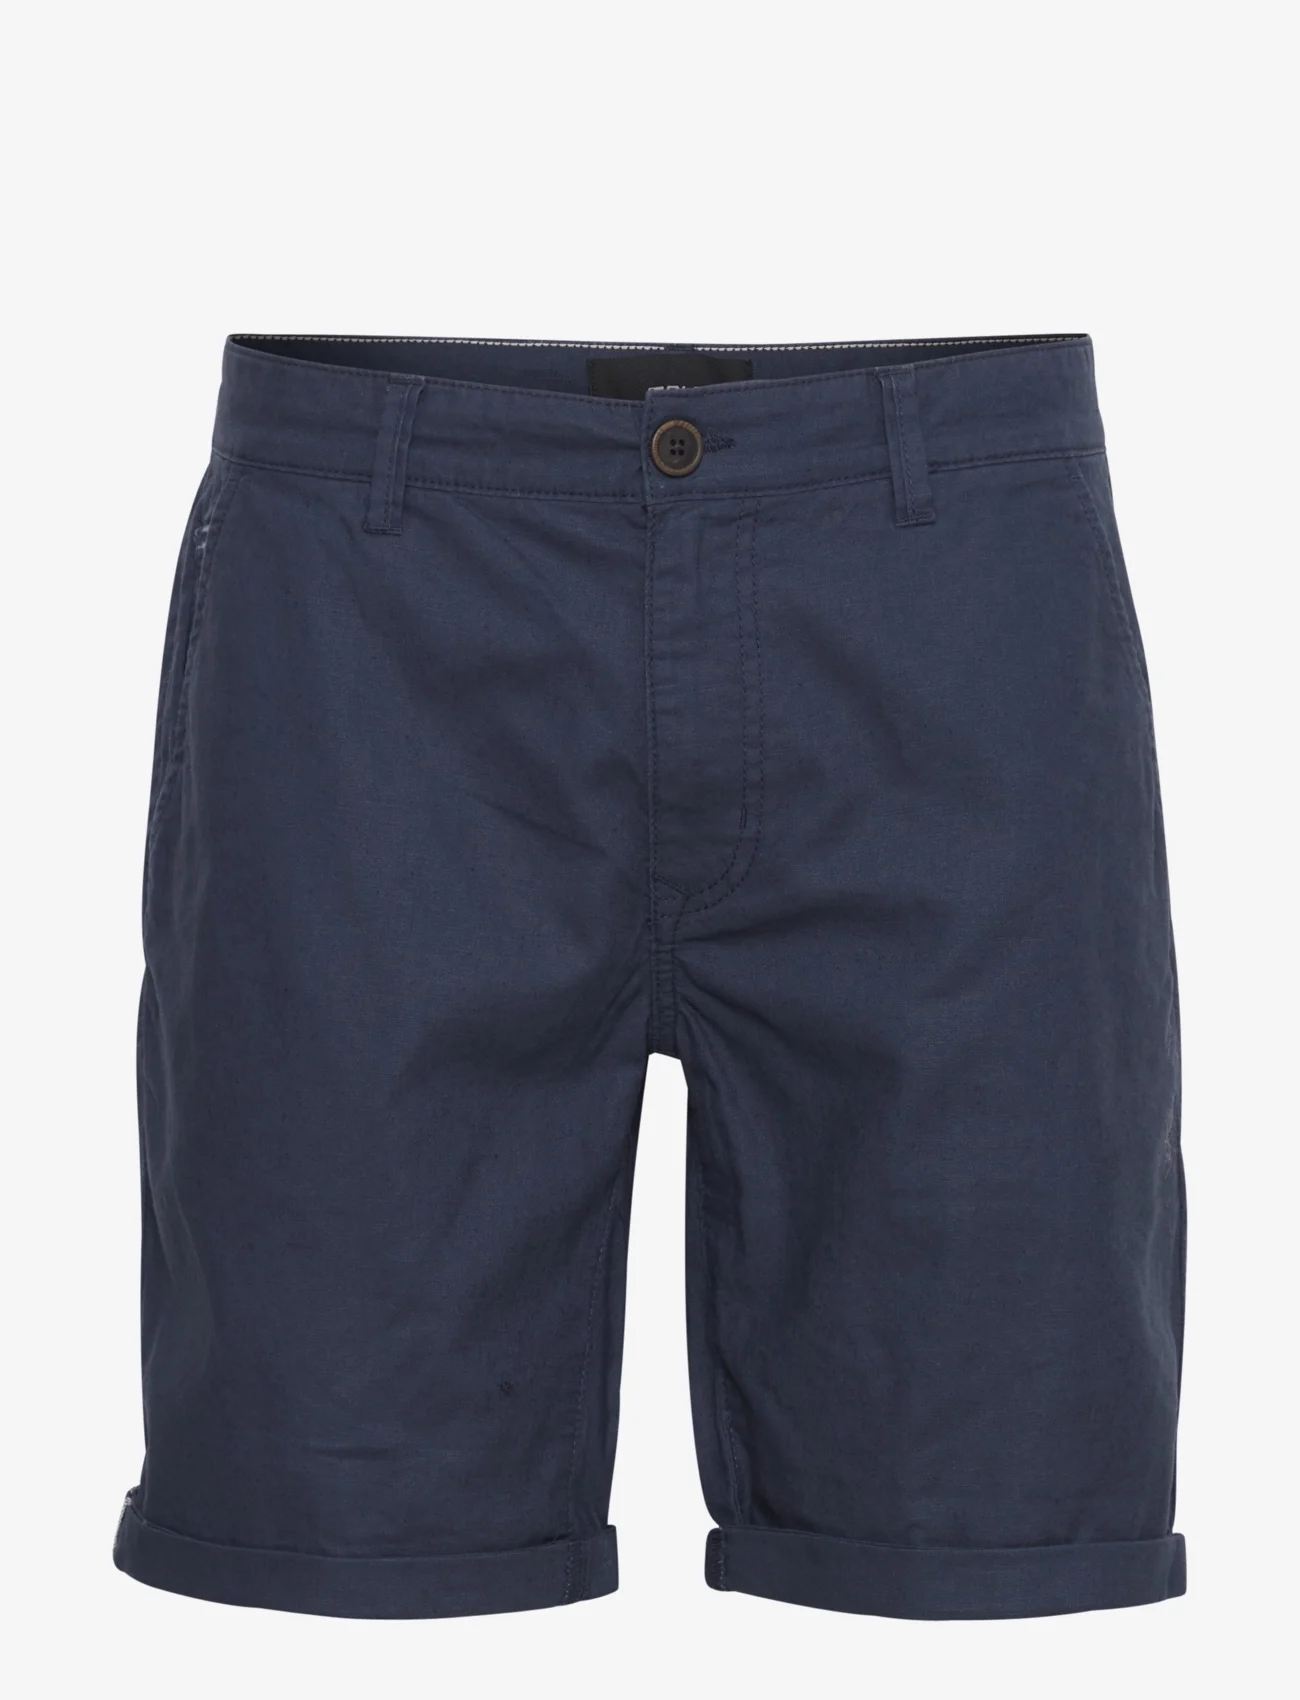 Blend - Shorts - linen shorts - dress blues - 0